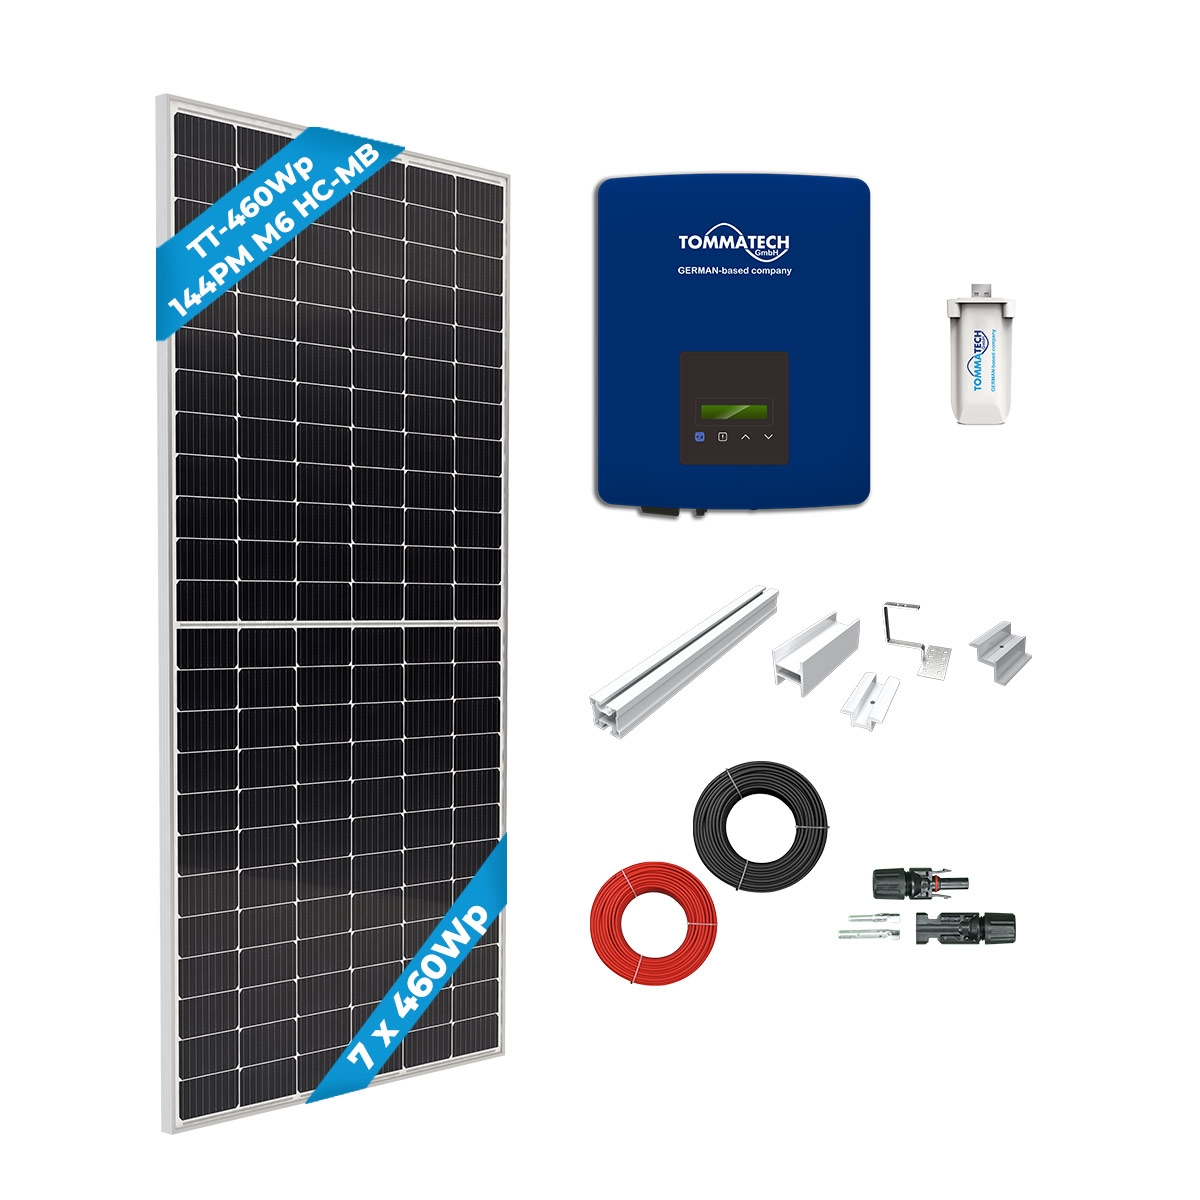 TommaTech 3kWe Kiremit Çatı Tek Faz On-Grid Solar Paket